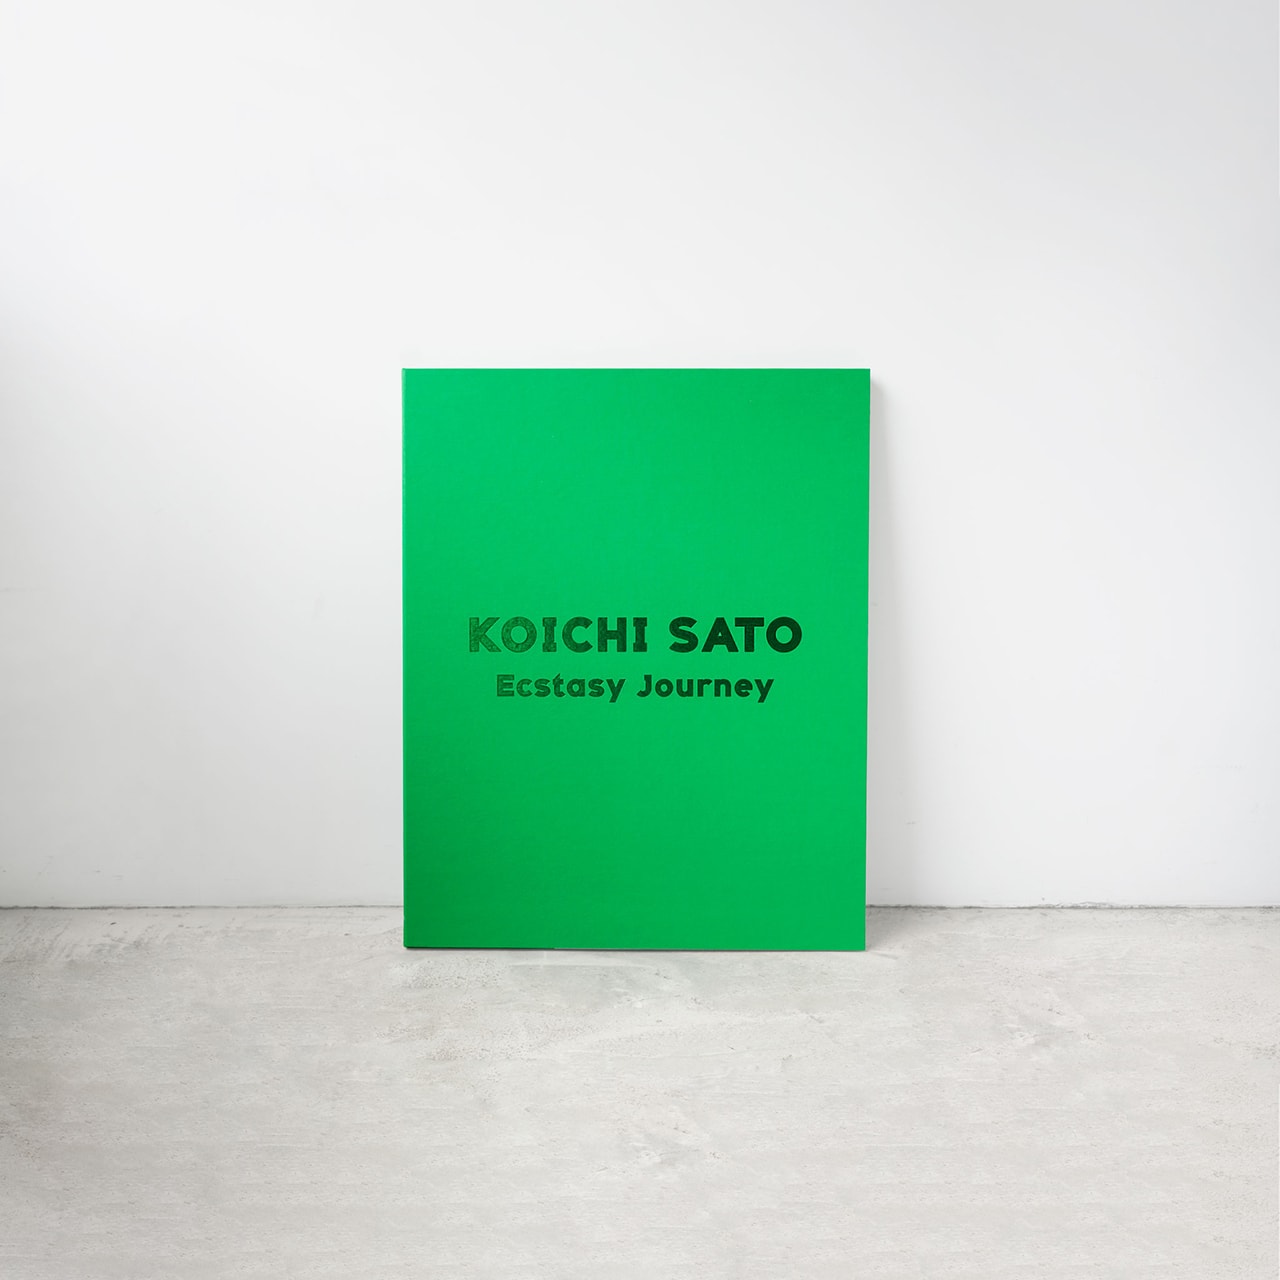 WOAW Gallery 即將開售 Koichi Sato 限量畫作「Ecstasy Journey 快楽旅行 」